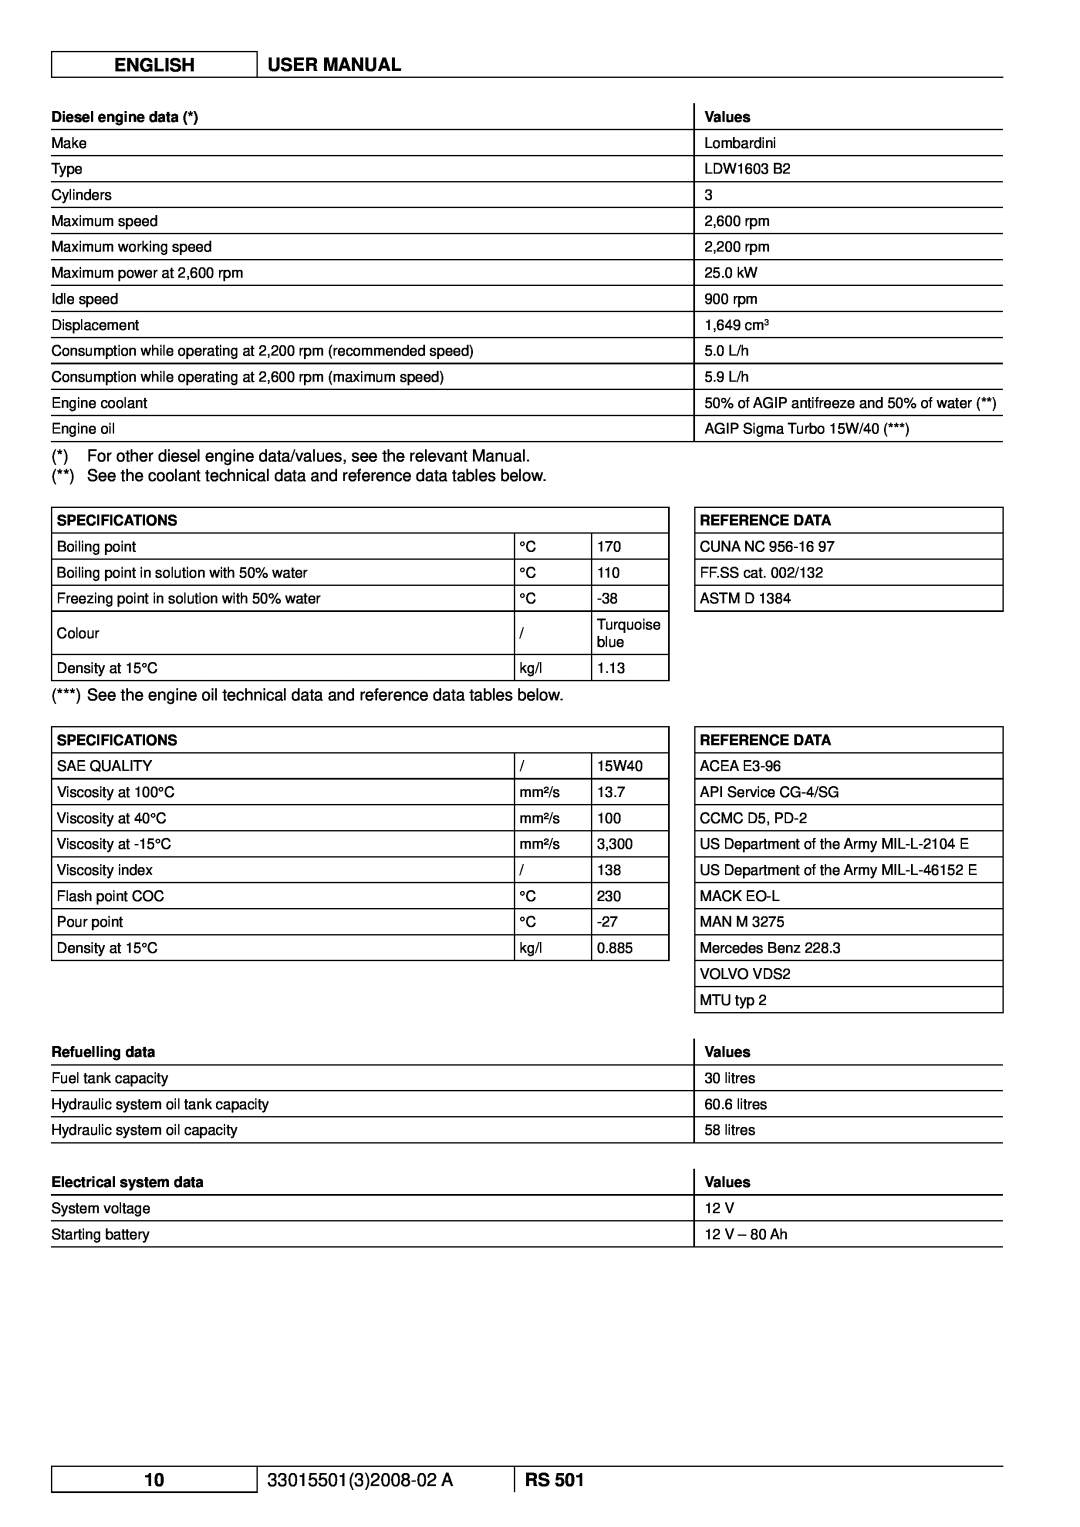 Nilfisk-ALTO RS 501 manuel dutilisation English, User Manual, 3301550132008-02A, Diesel engine data 